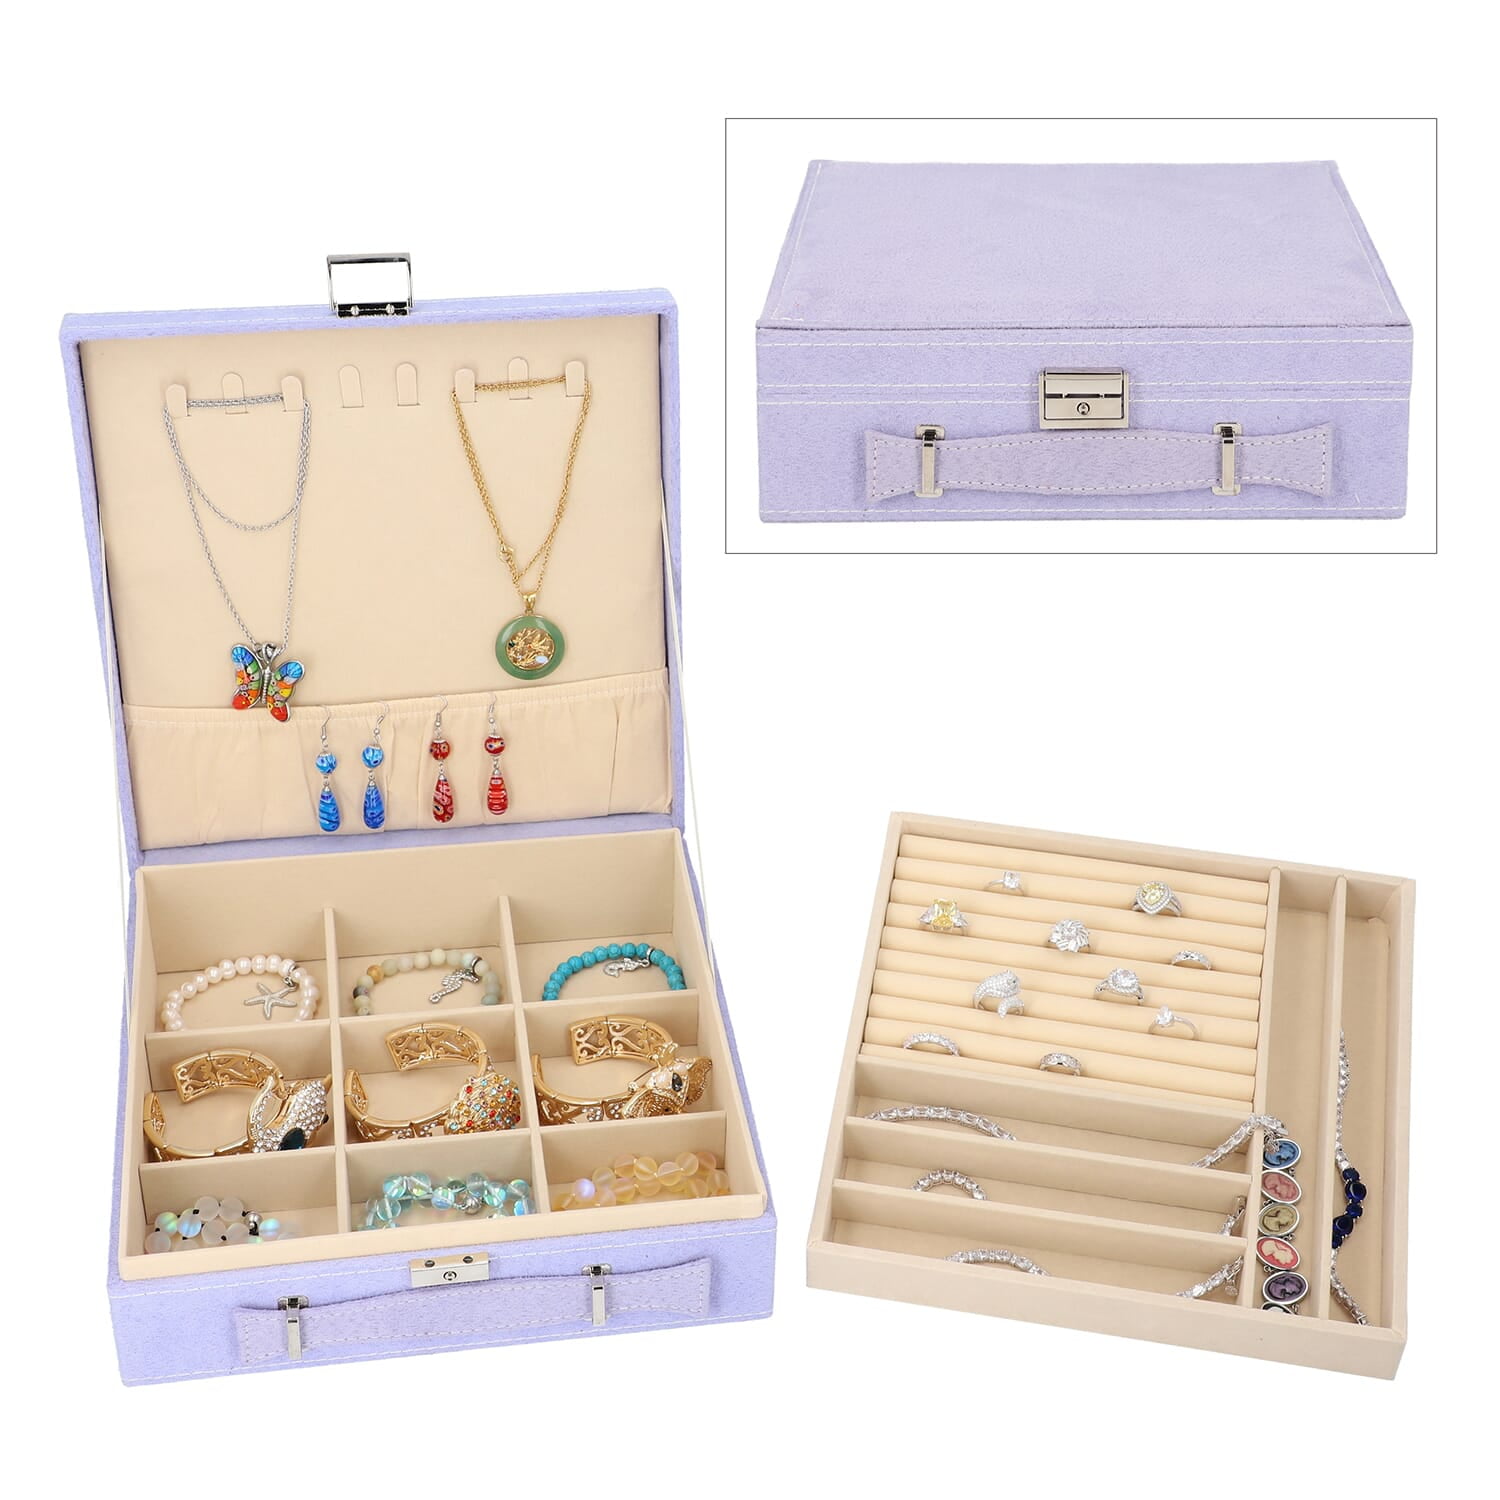 Shop LC Jewelry Organizer Box for Women Faux Velvet Anti Tarnish 2 Layer Blue Storage Case, Women's, Size: 10.2x10.2x3.2/10x3X10